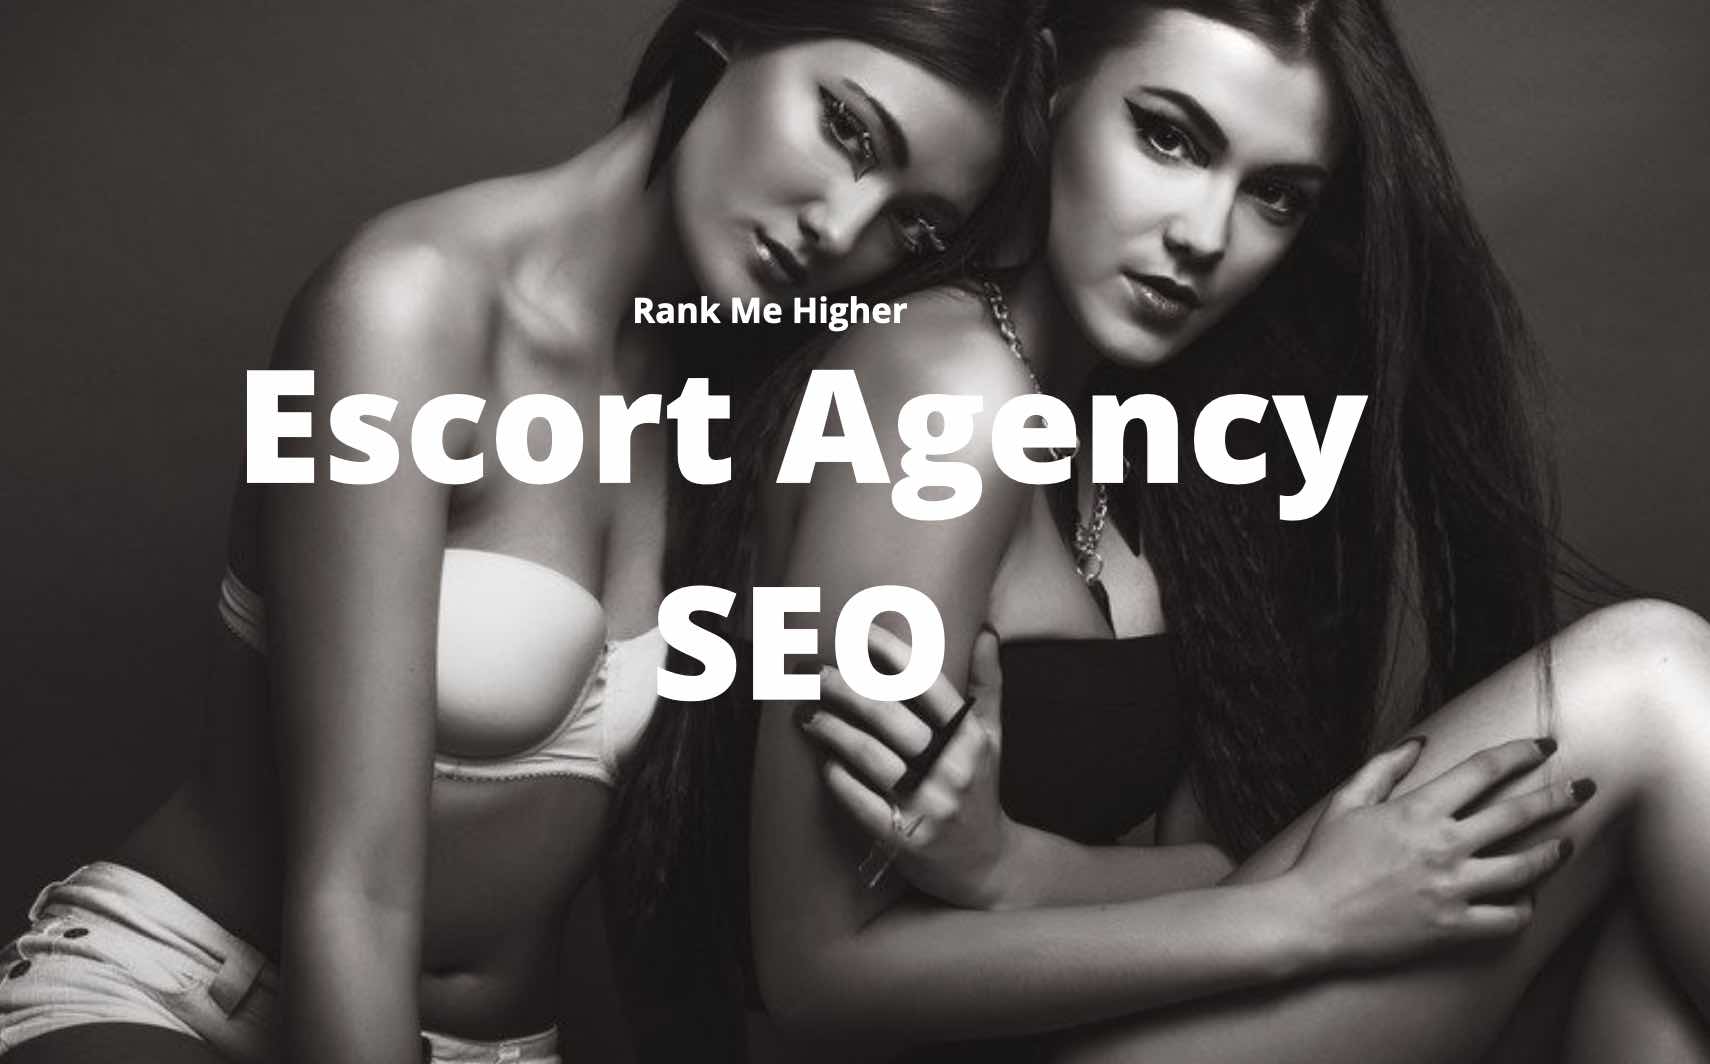 Escort agency SEO services